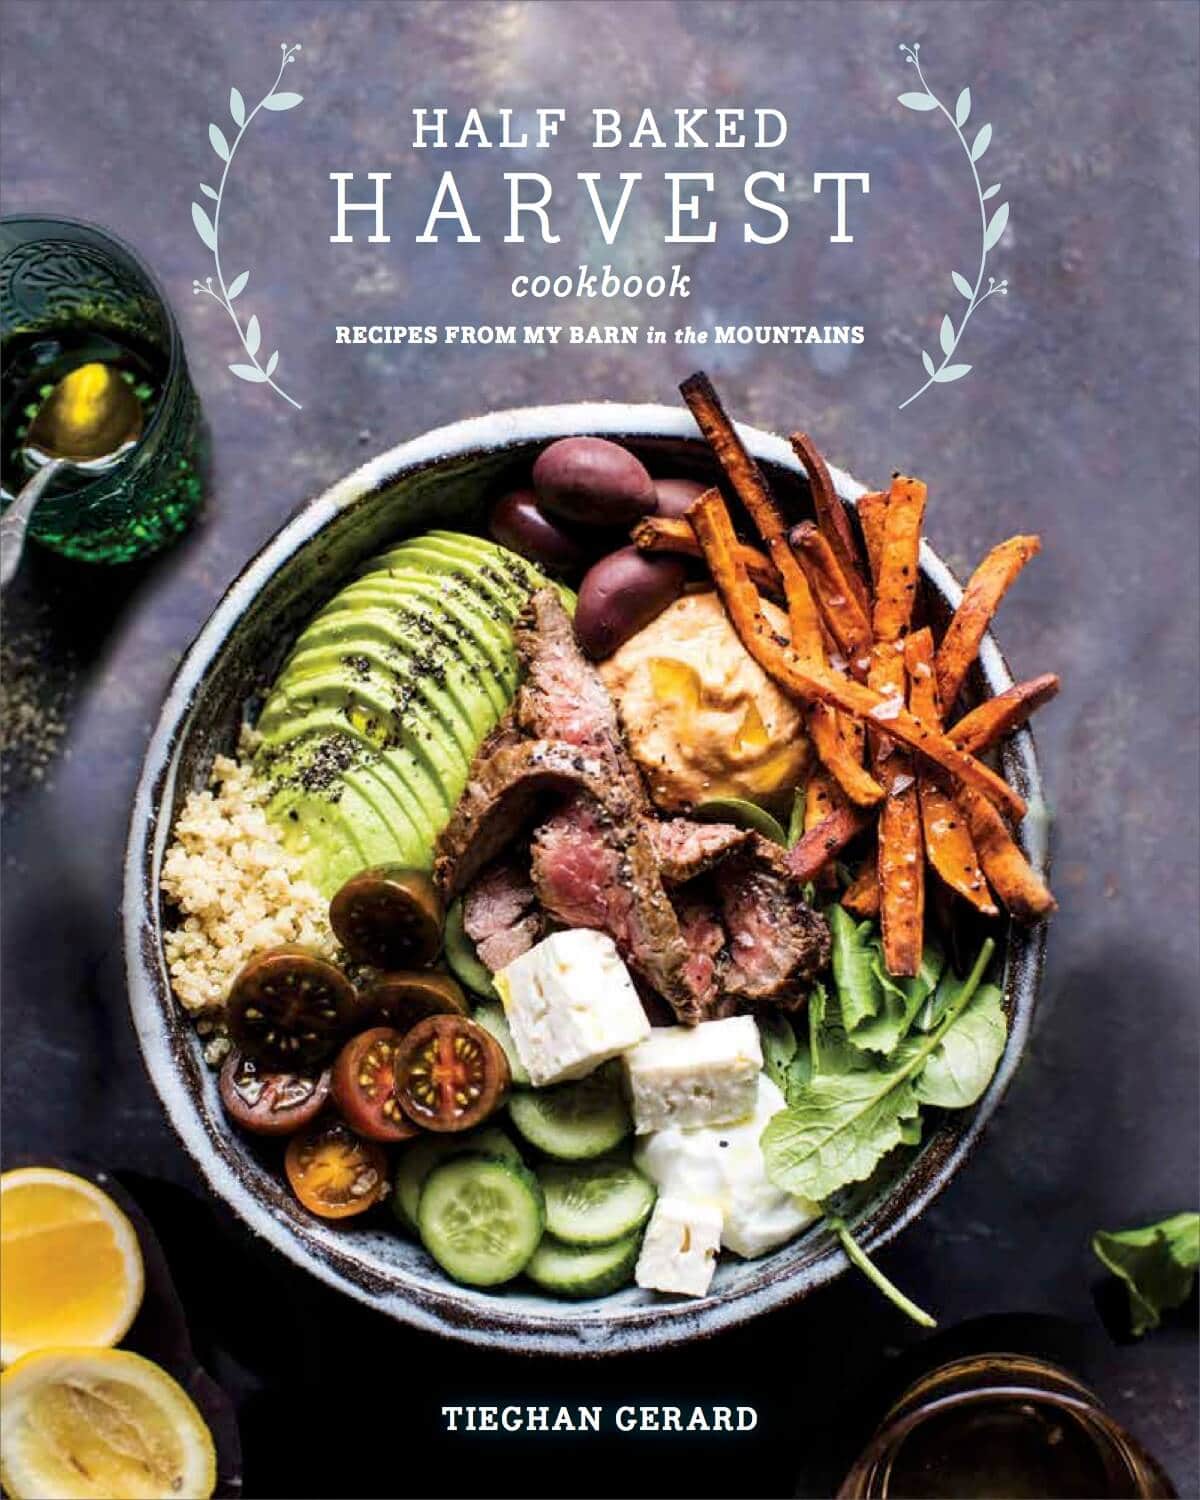 Half Baked Harvest Cookbook Cover | halfbakedharvest.com @hbharvest